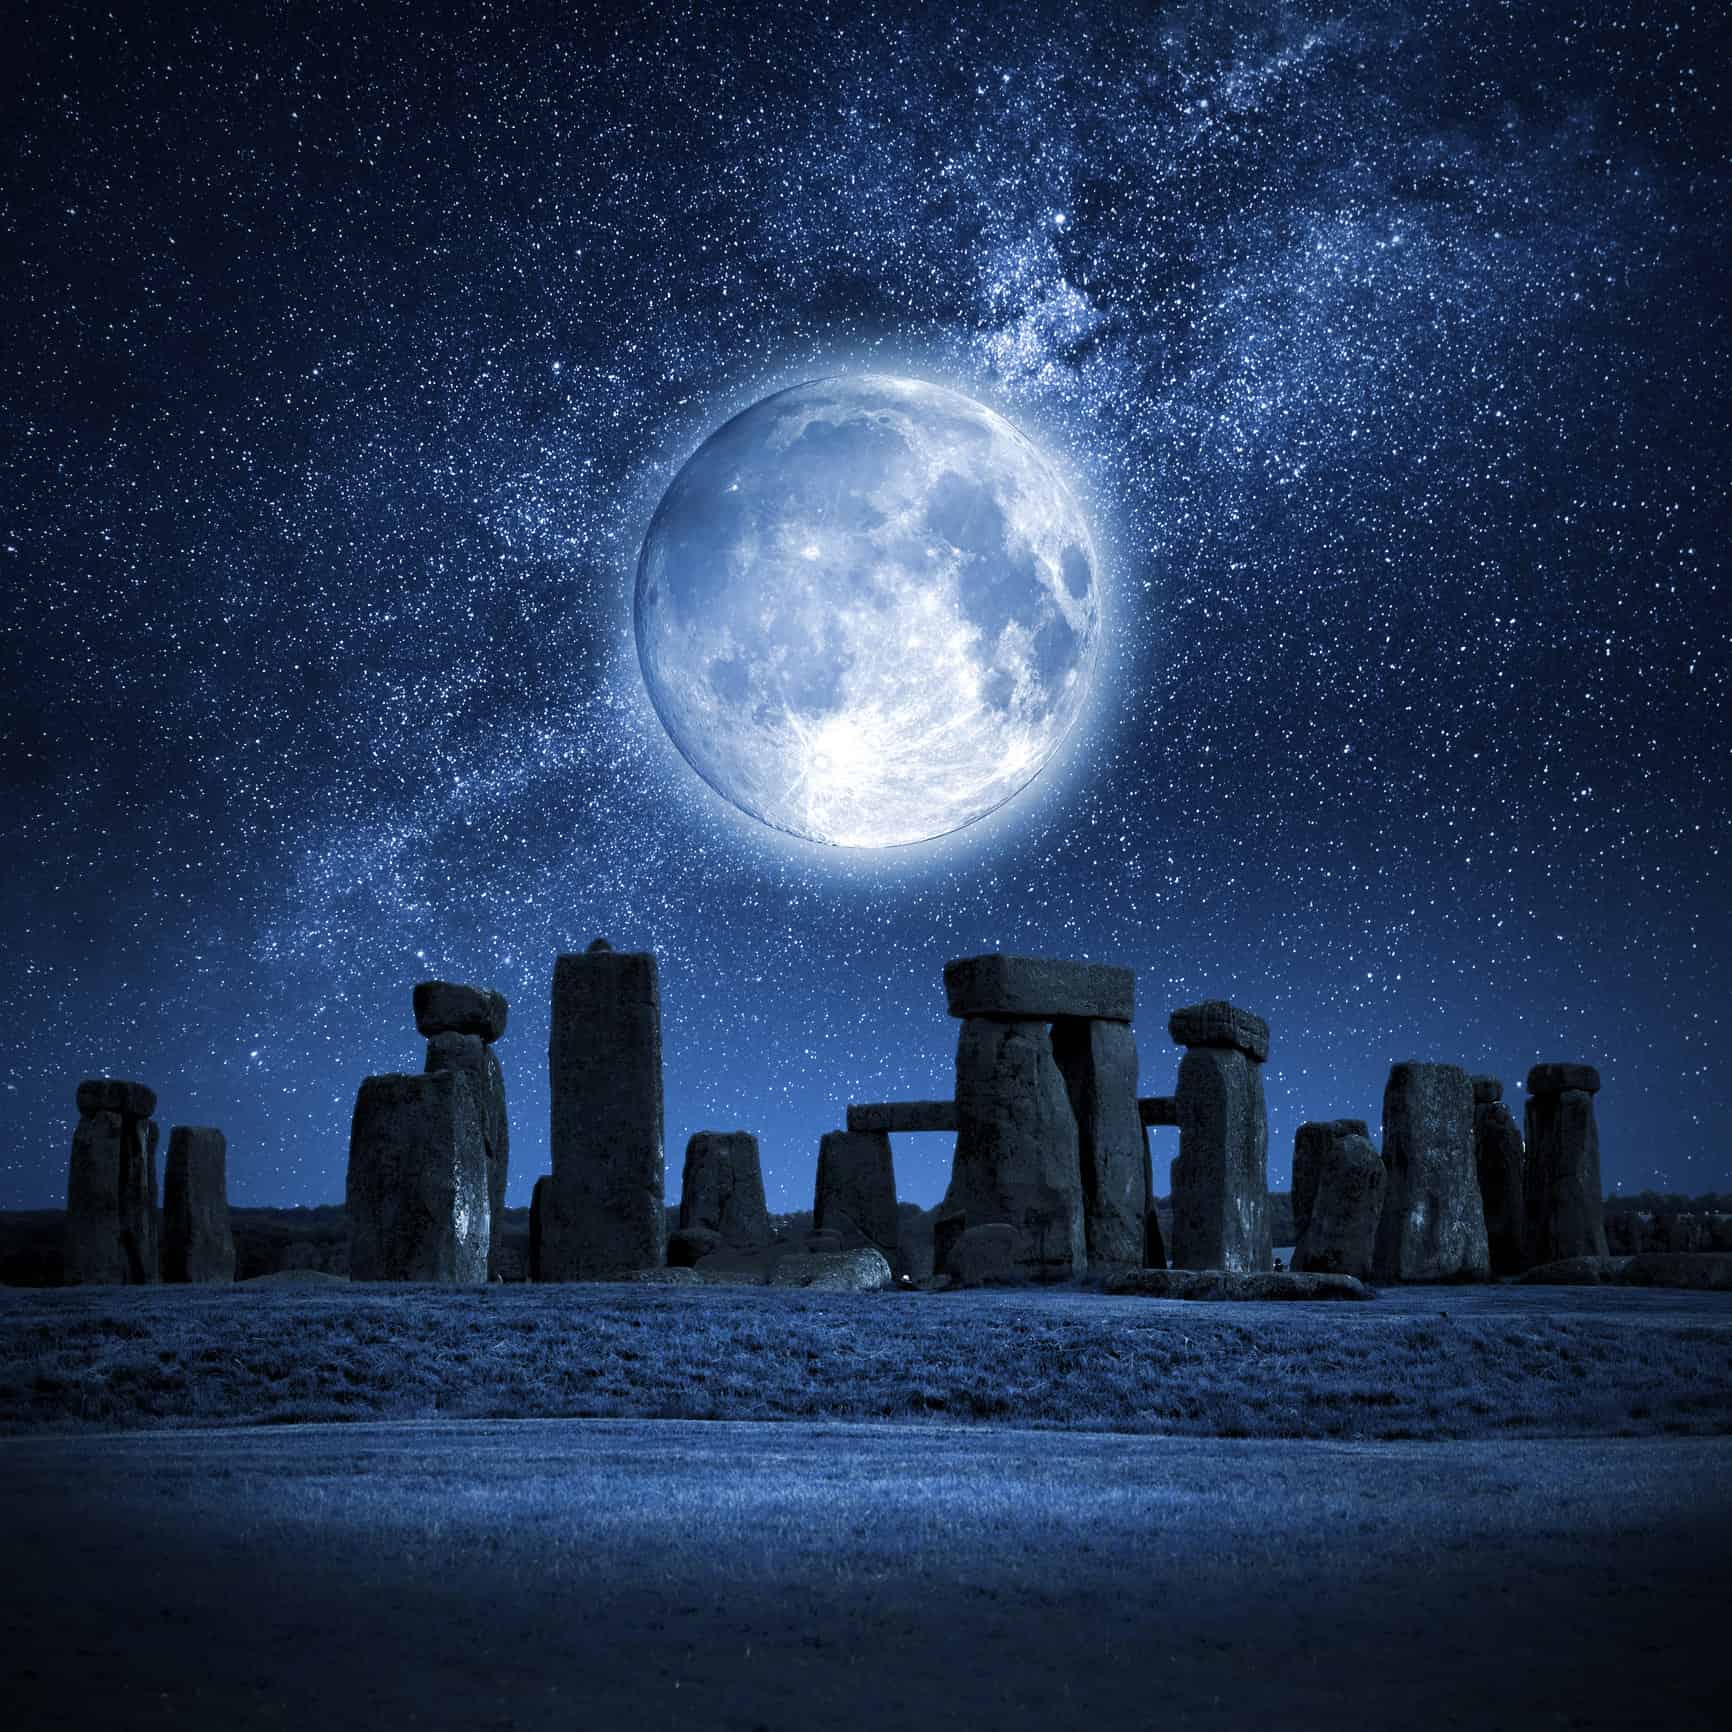 Full Moon luminating above Stonehenge